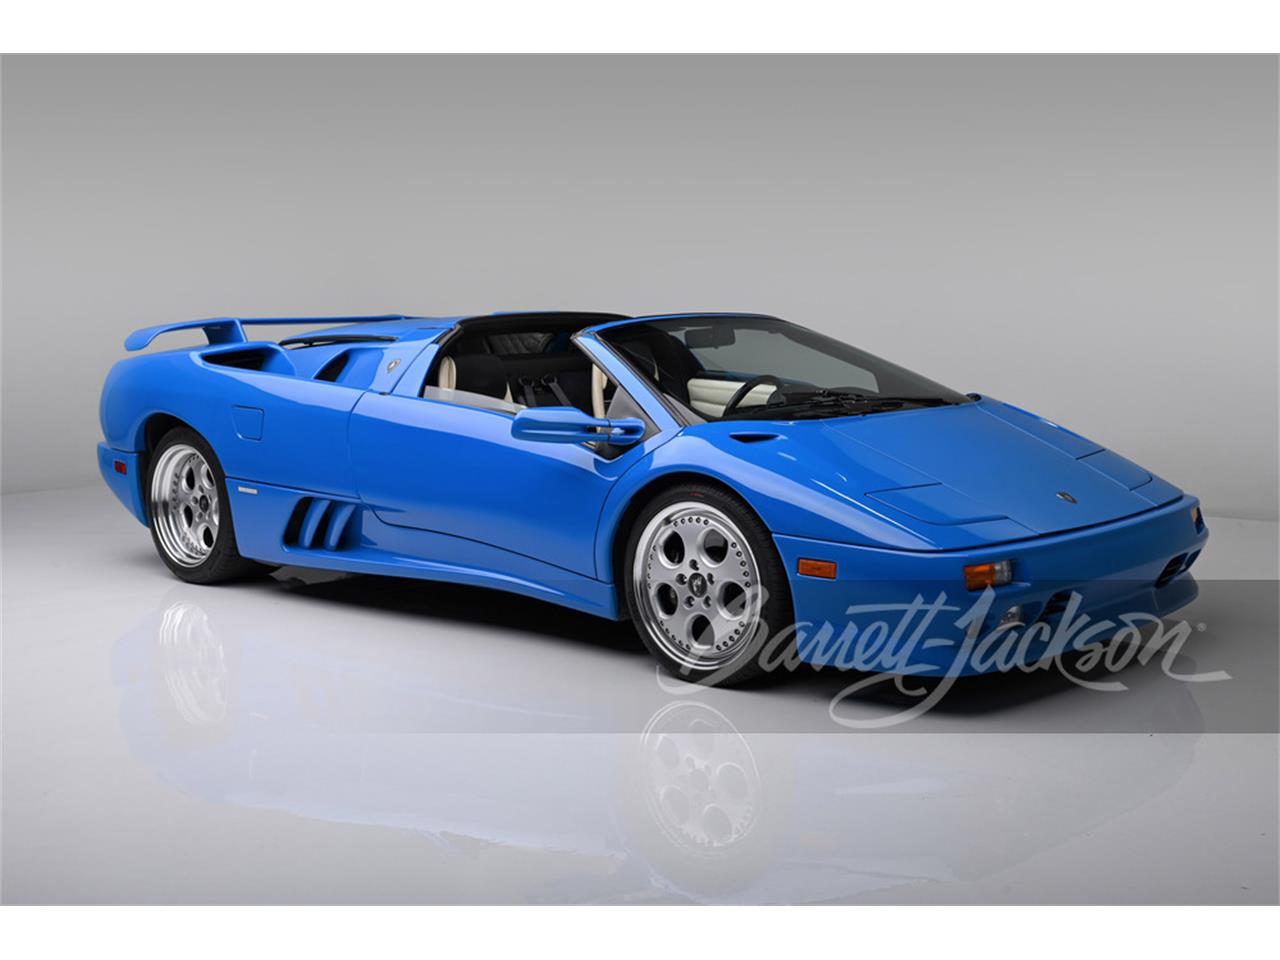 For Sale at Auction: 1997 Lamborghini Diablo in Scottsdale, Arizona for sale in Scottsdale, AZ